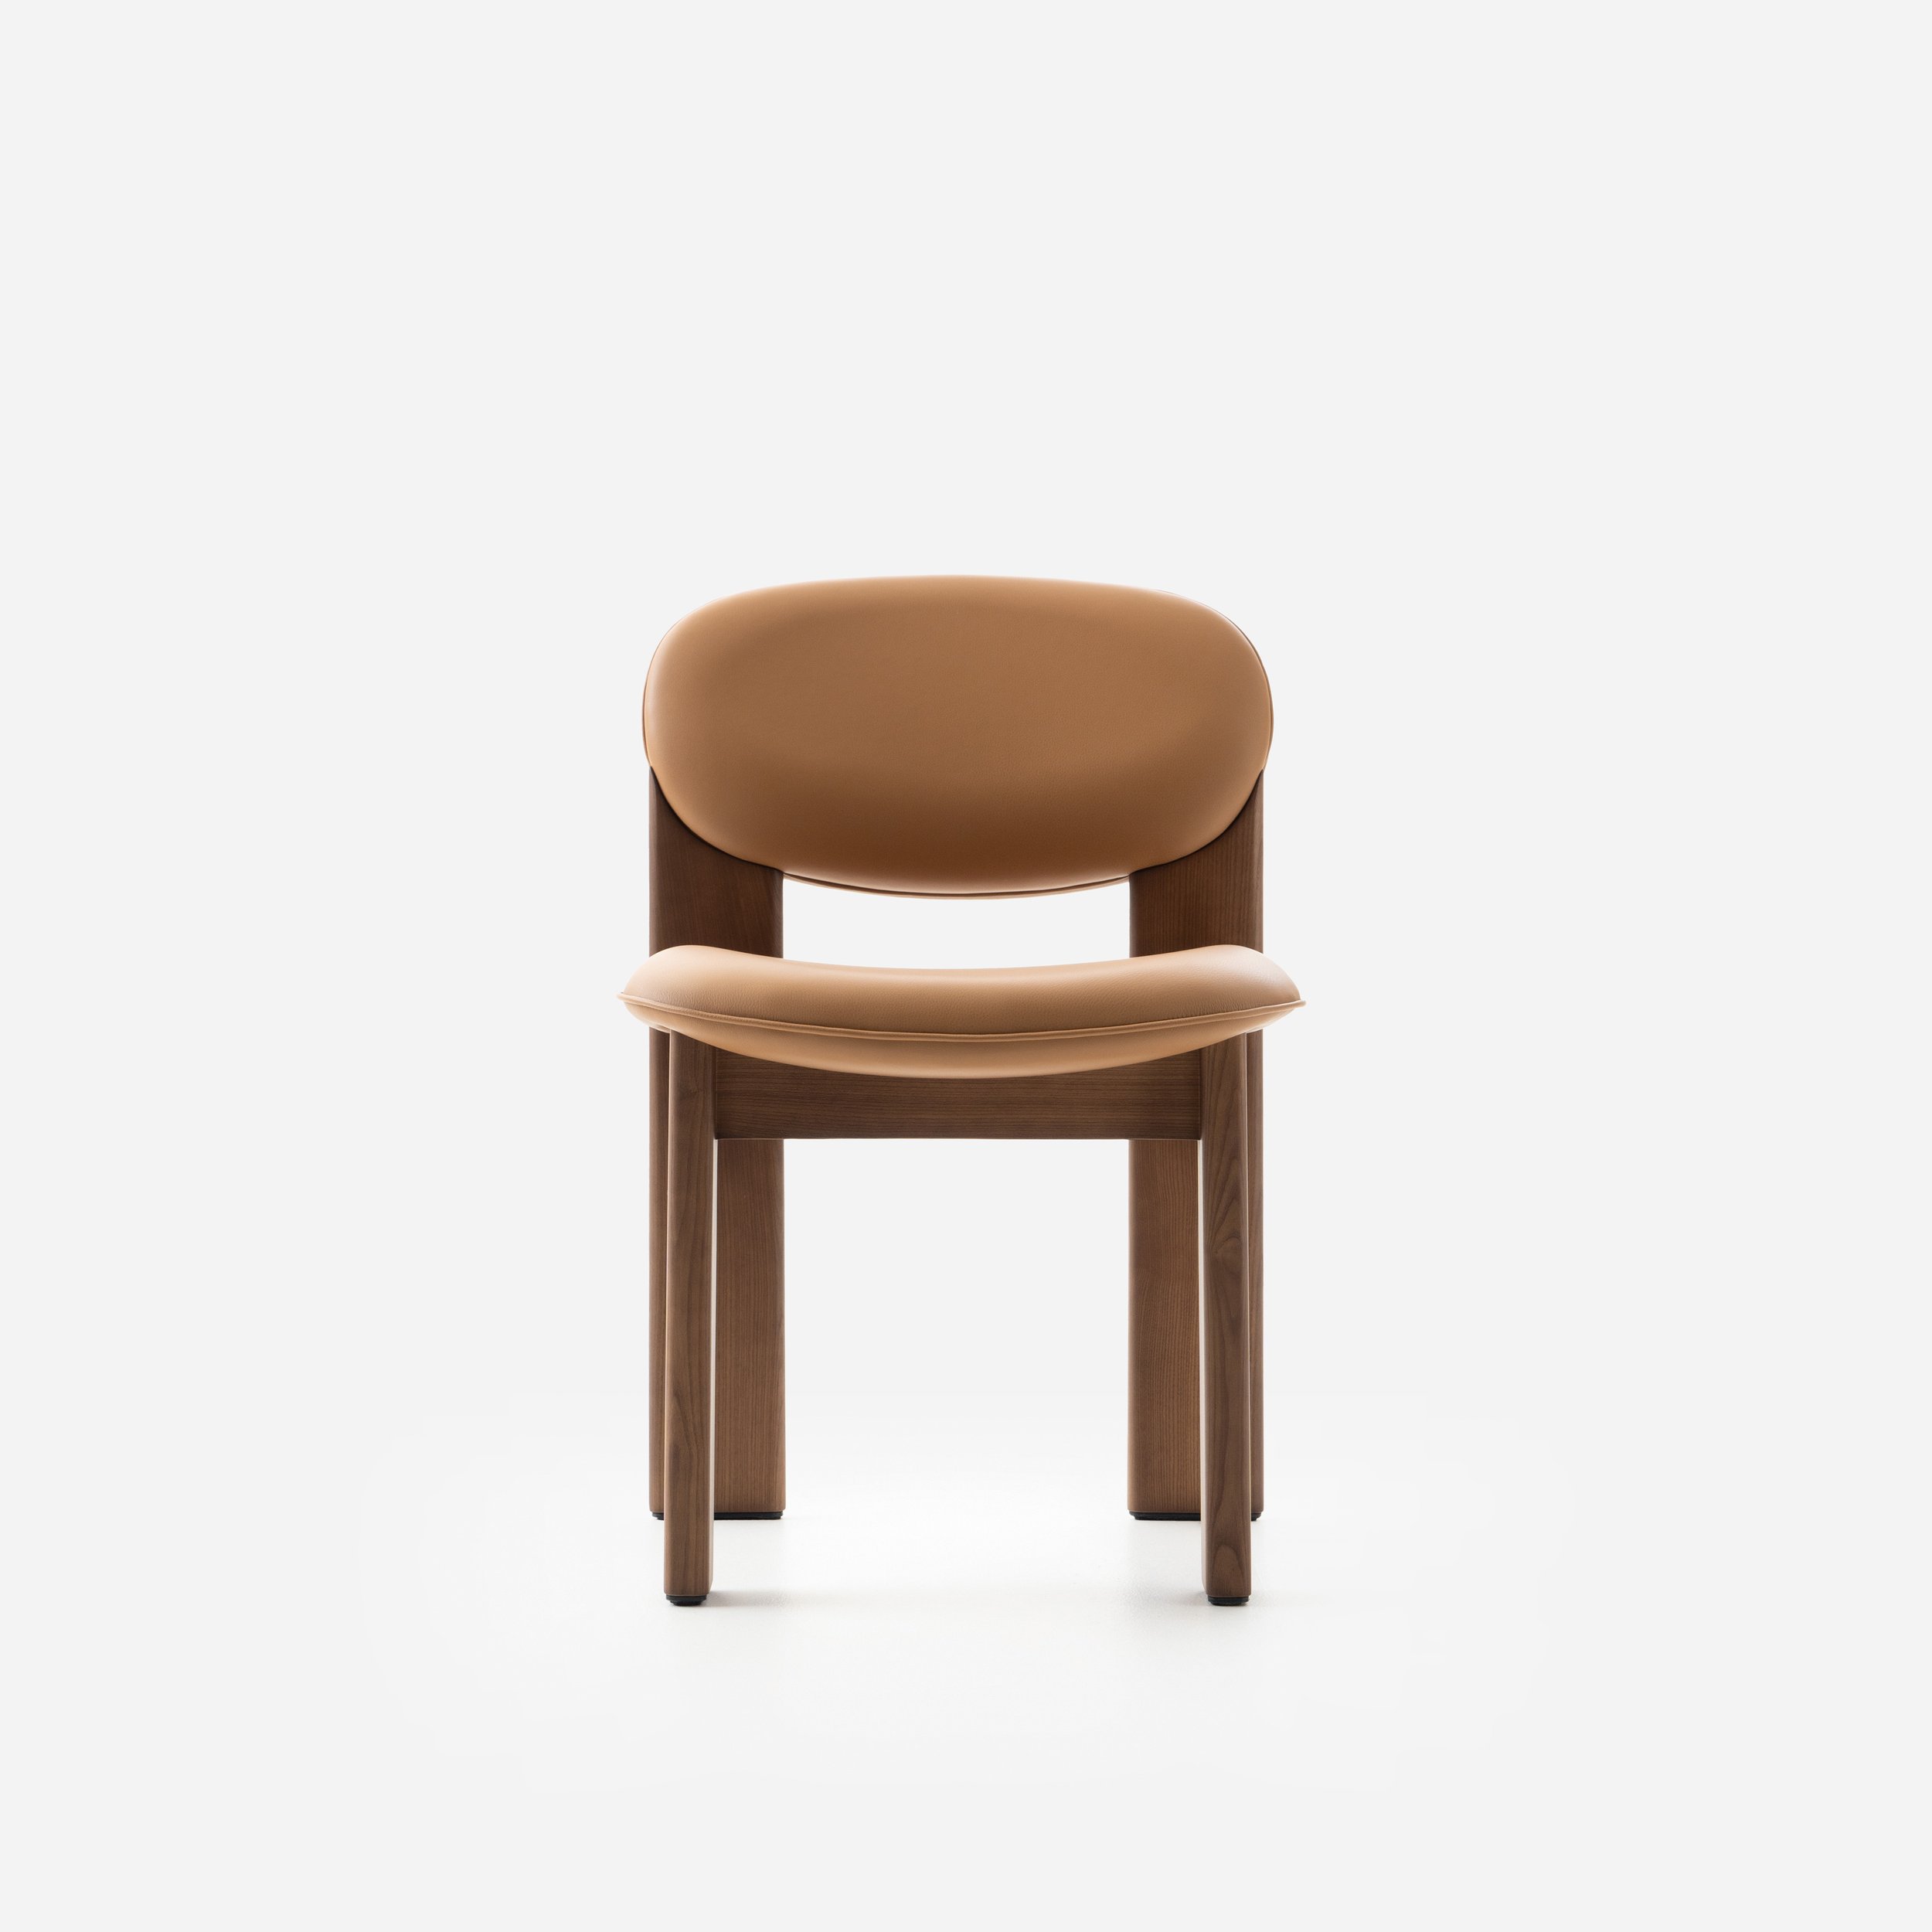 Archipen chair by NOOM sm (10).jpg